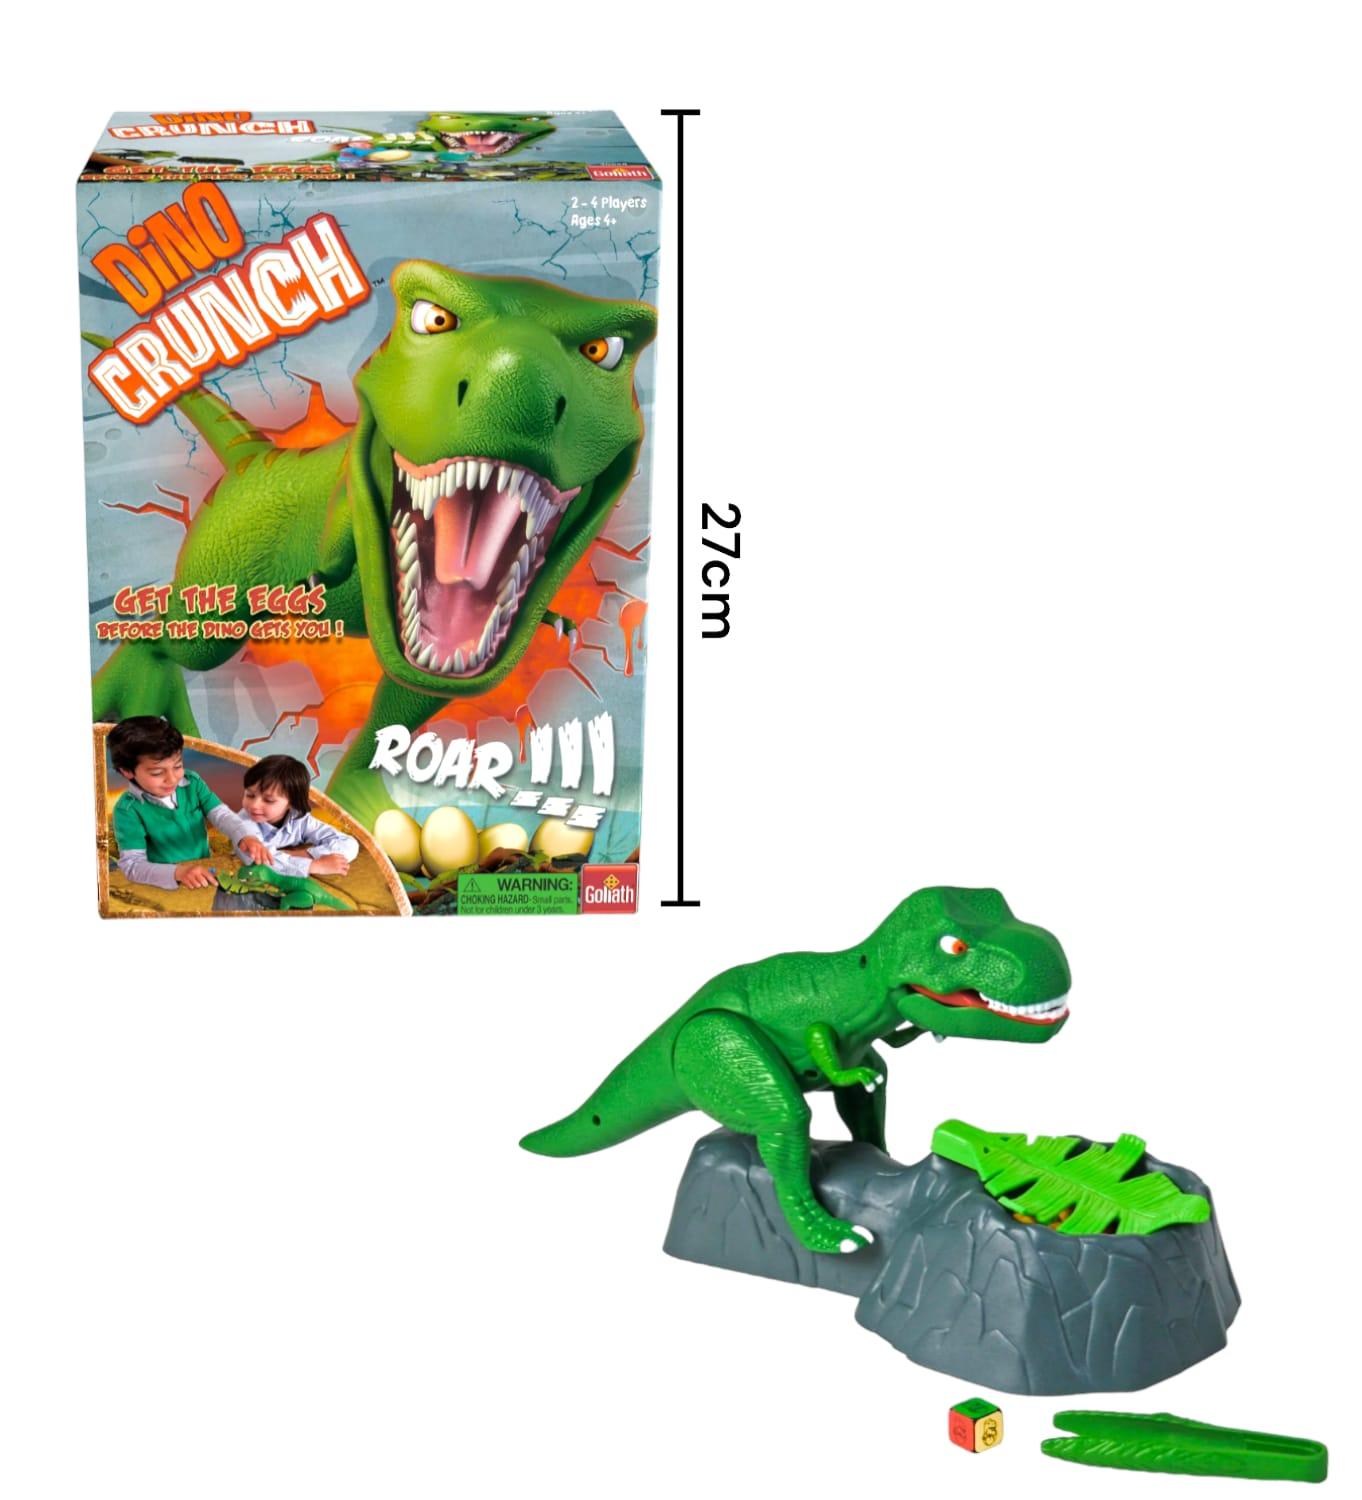 Dino Crunch Juego de Mesa